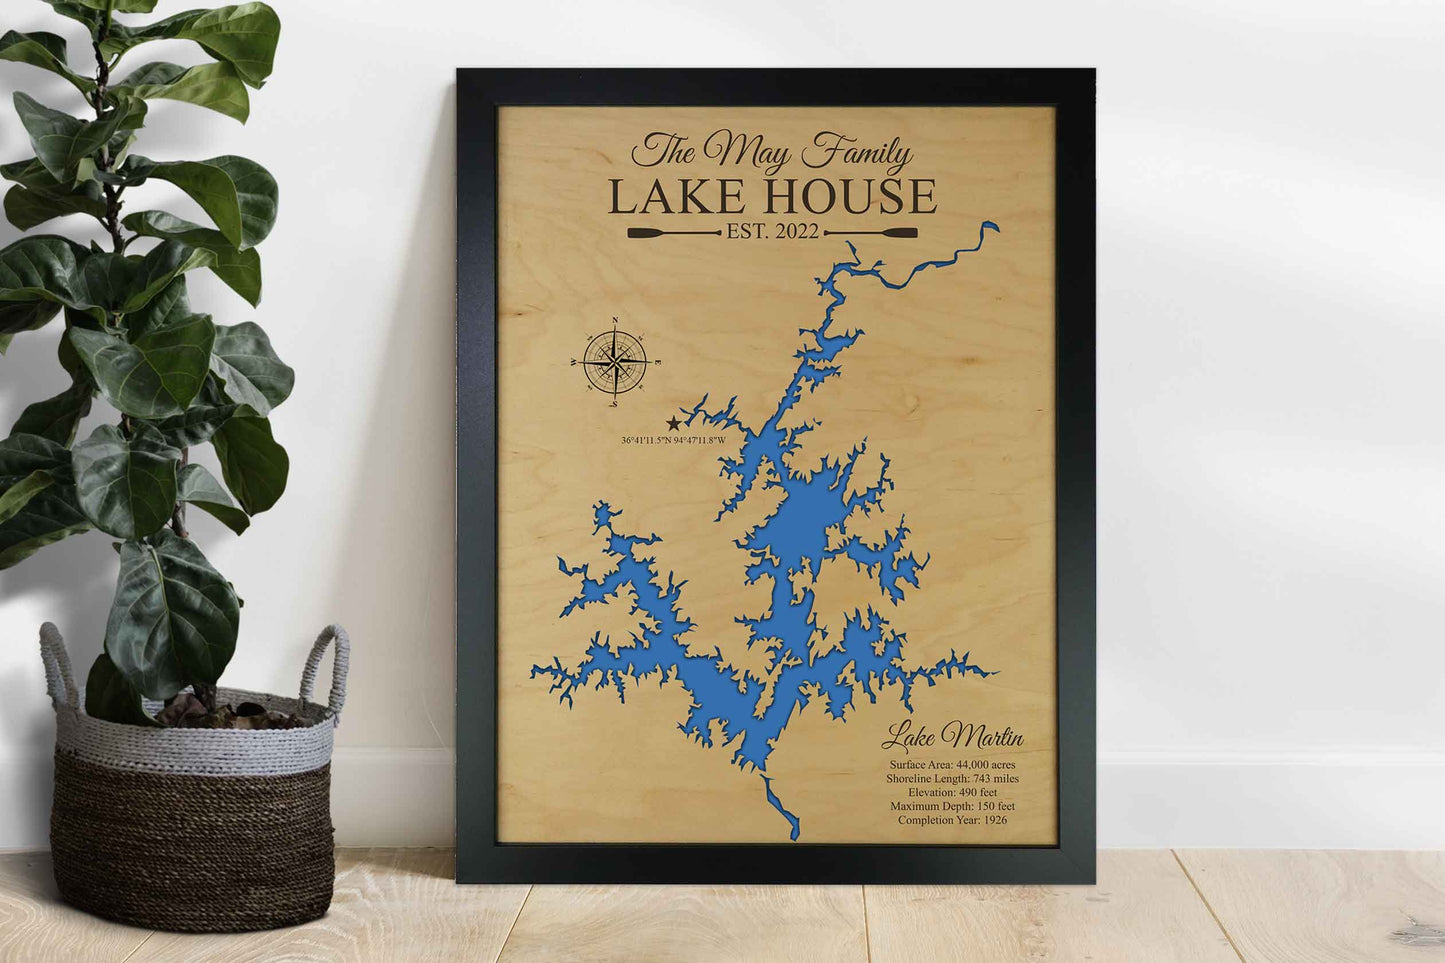 Lake Blueridge, Georgia - Notting Hill Designs - Custom Wood Maps